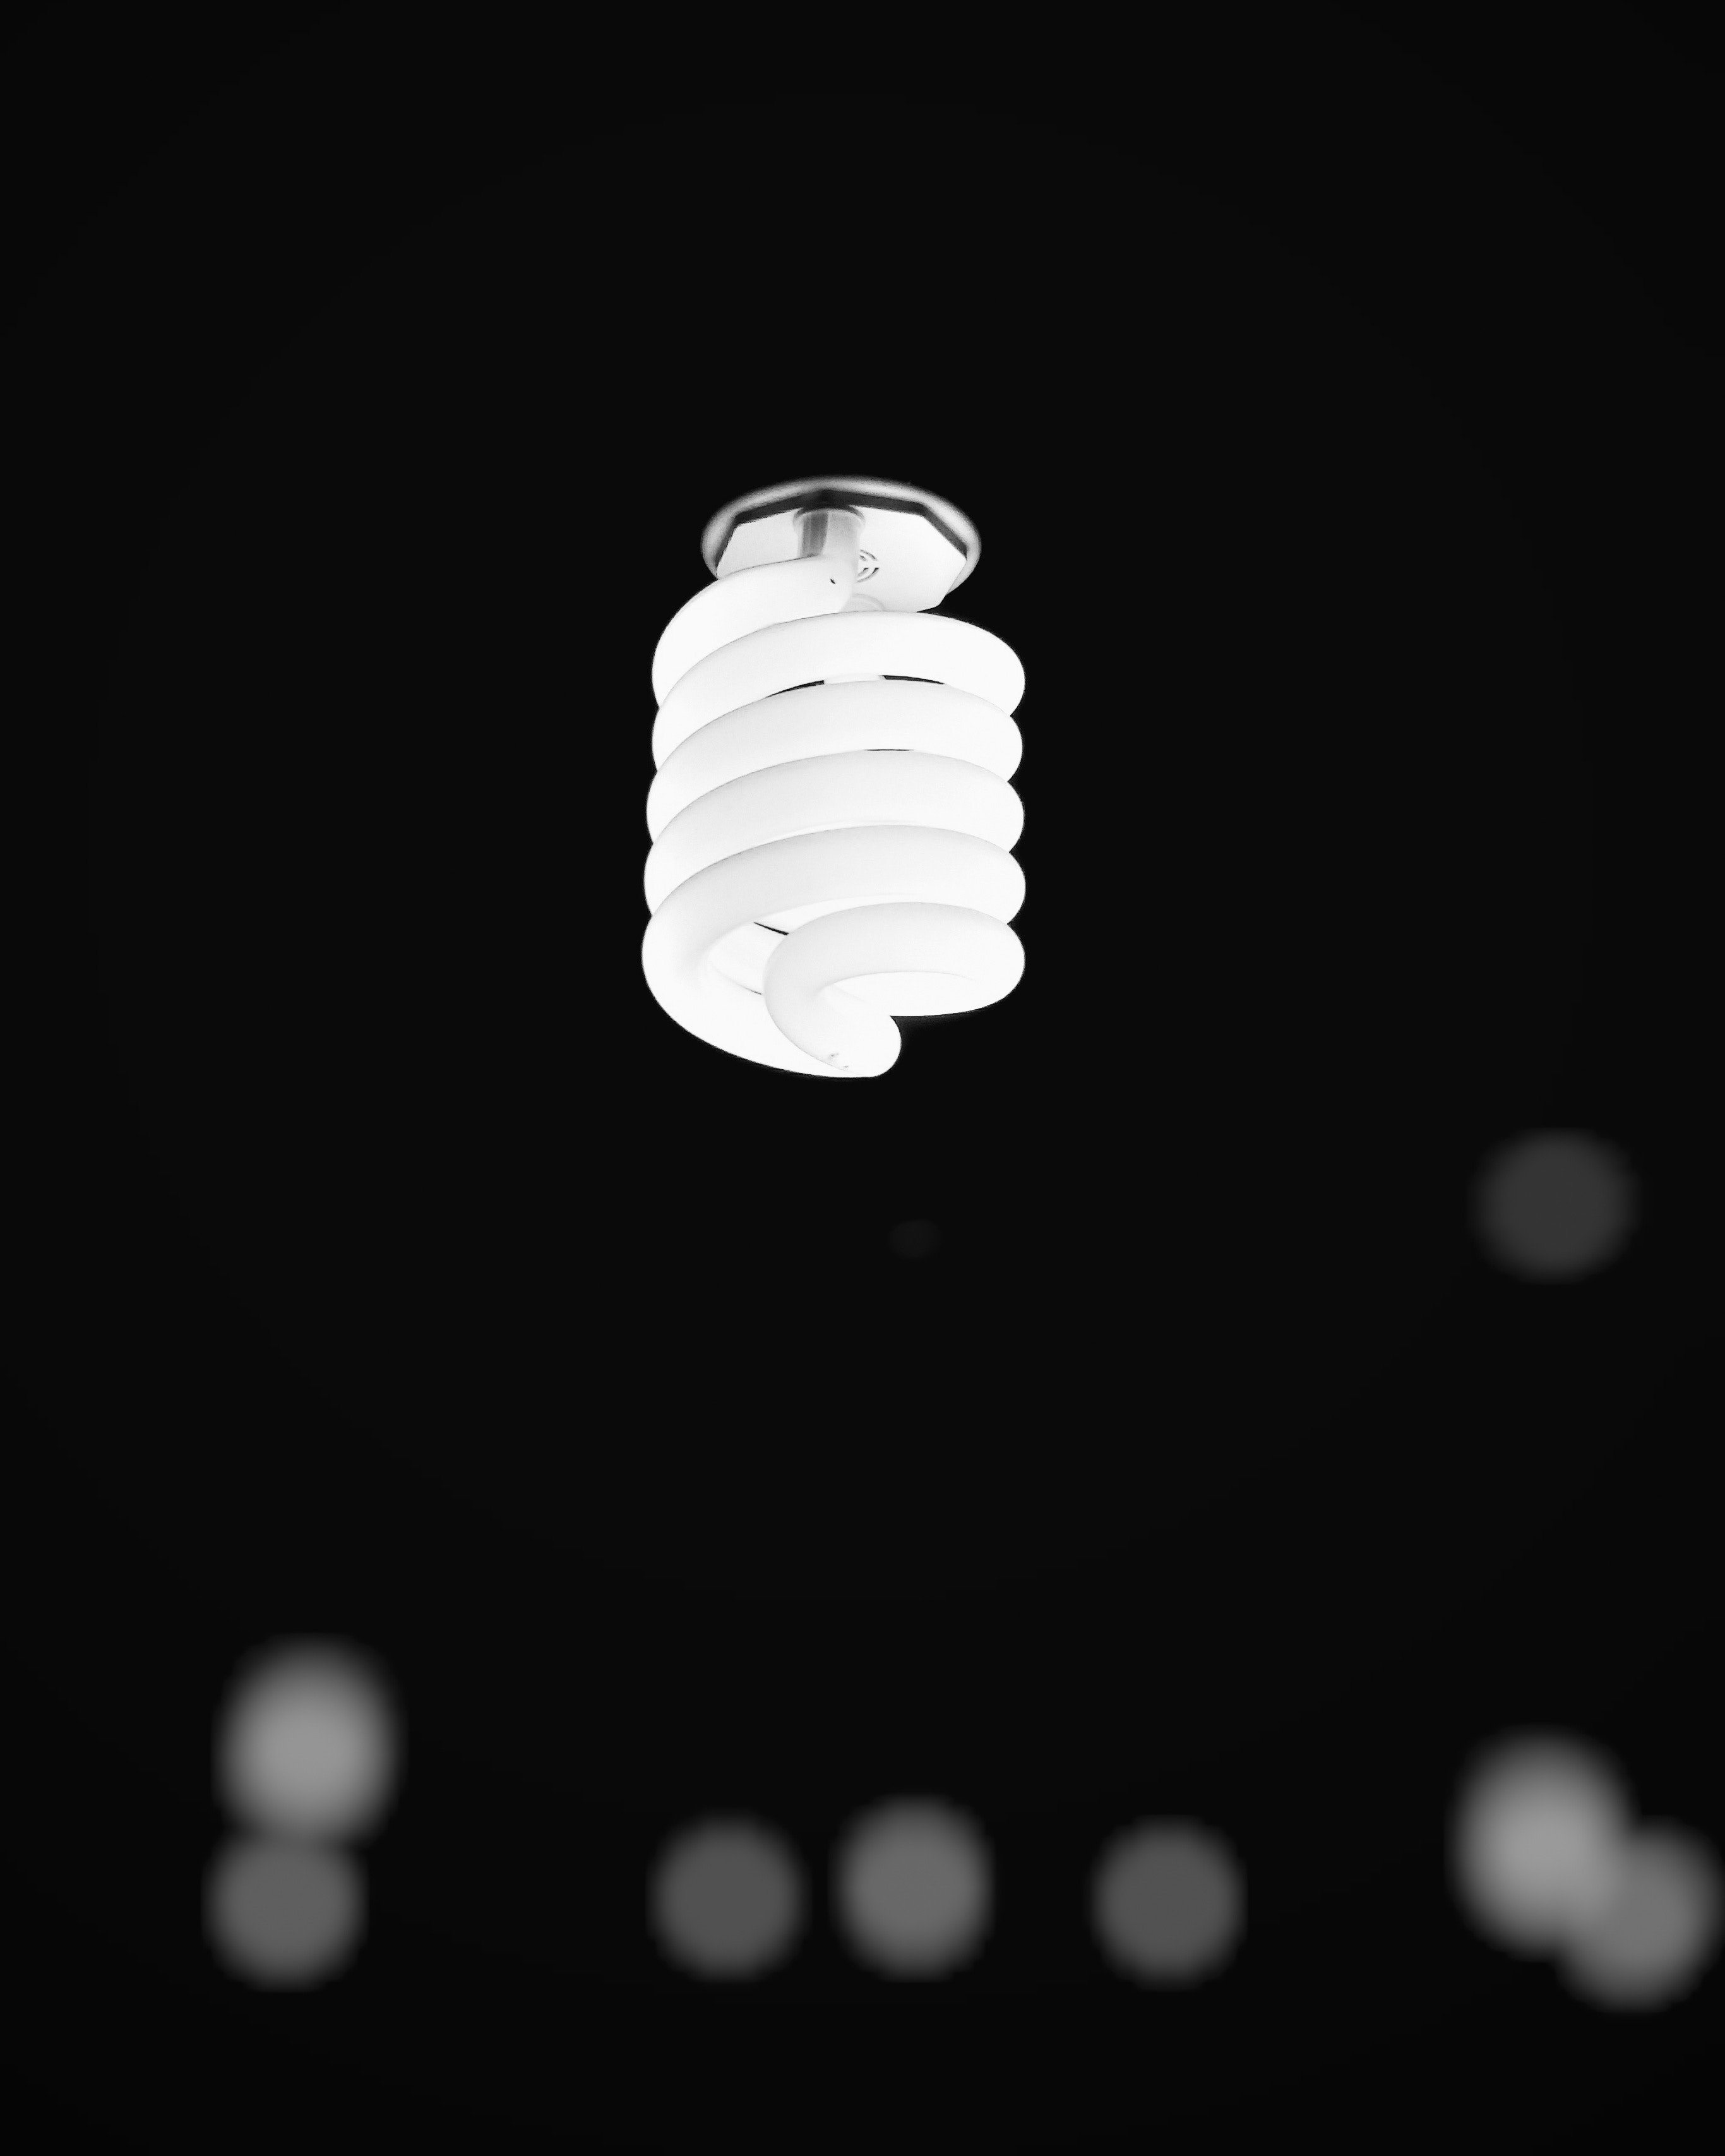 HD wallpaper light bulb, electricity, black, illumination, bw, chb, spiral, lighting